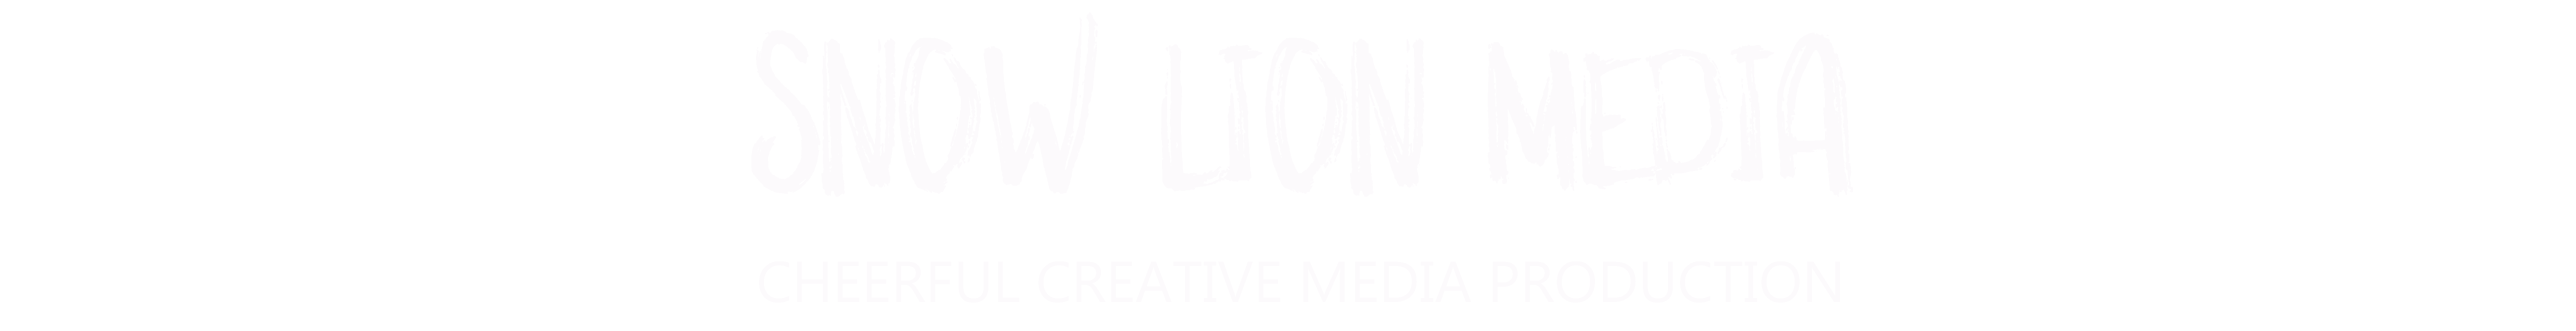 SNOW LION MEDIA